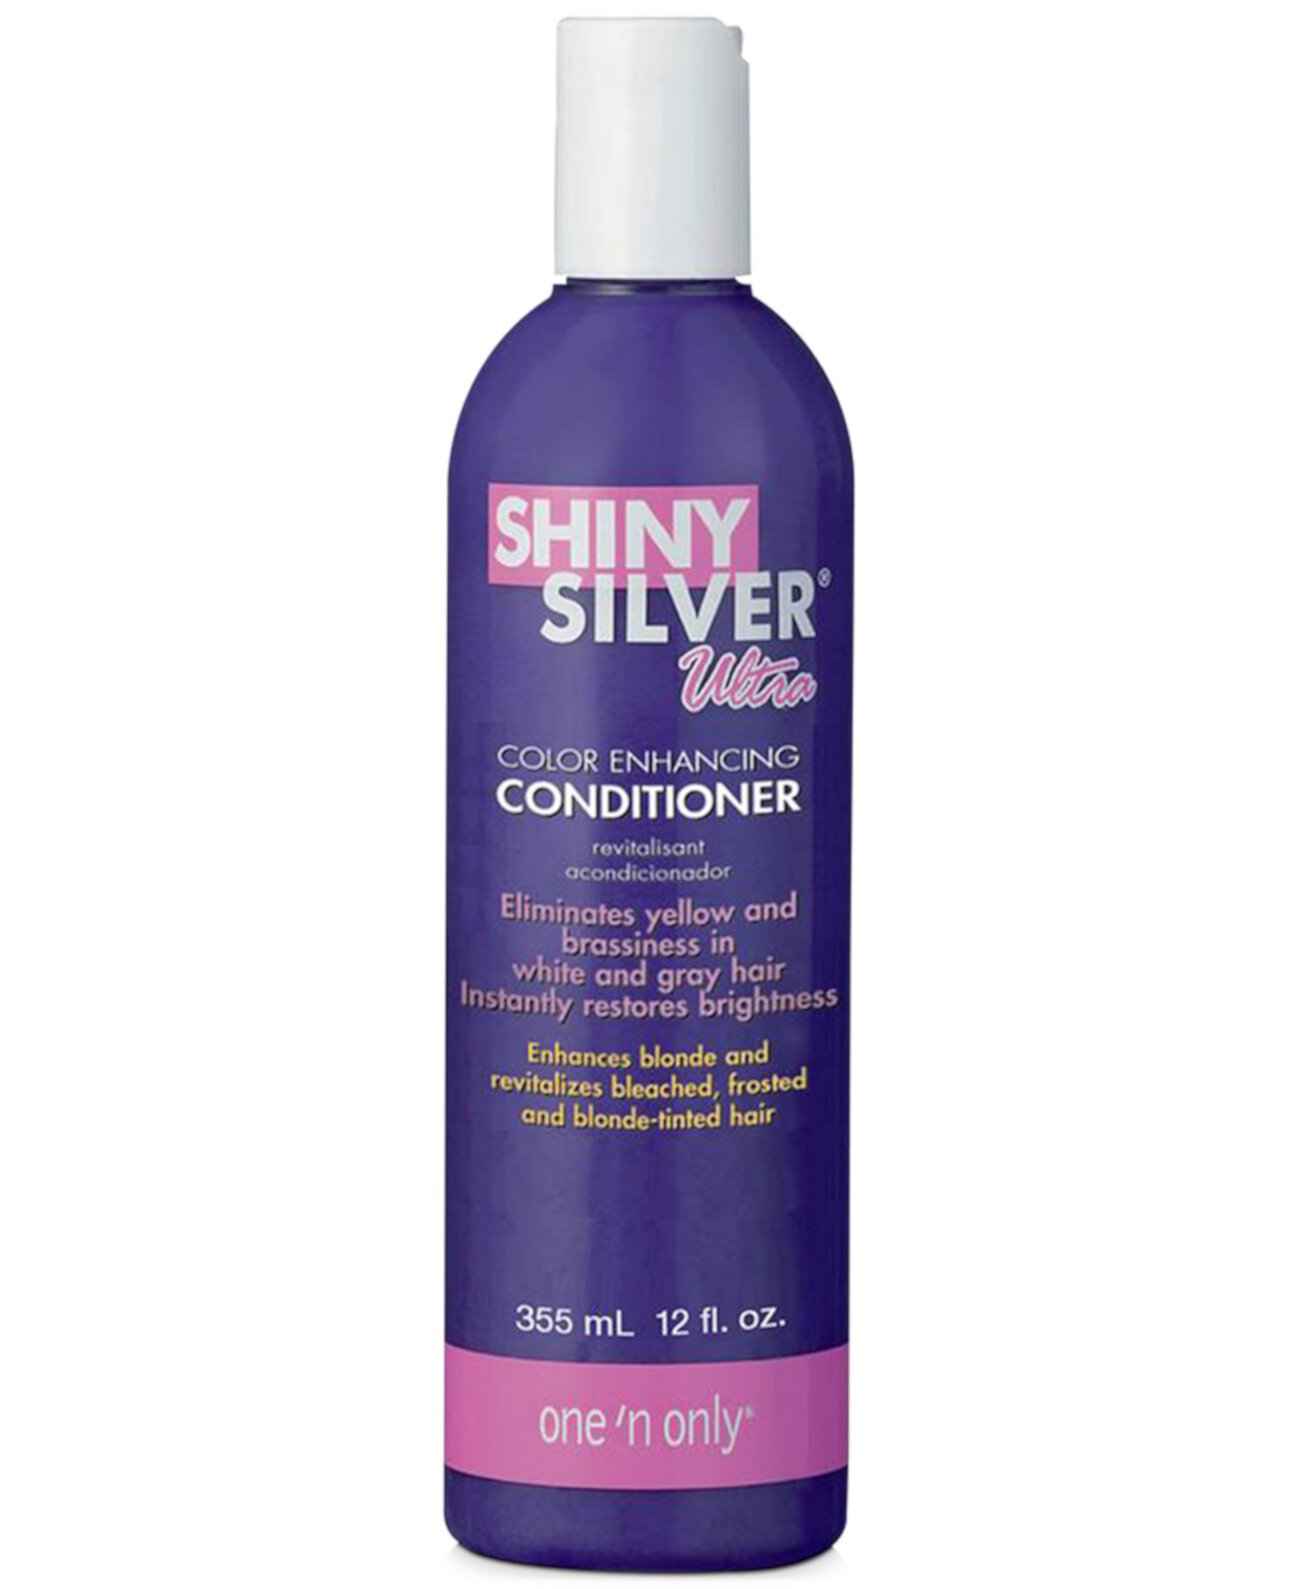 Кондиционер для улучшения цвета Shiny Silver Ultra, 12 унций, от PUREBEAUTY Salon & Spa One n' Only